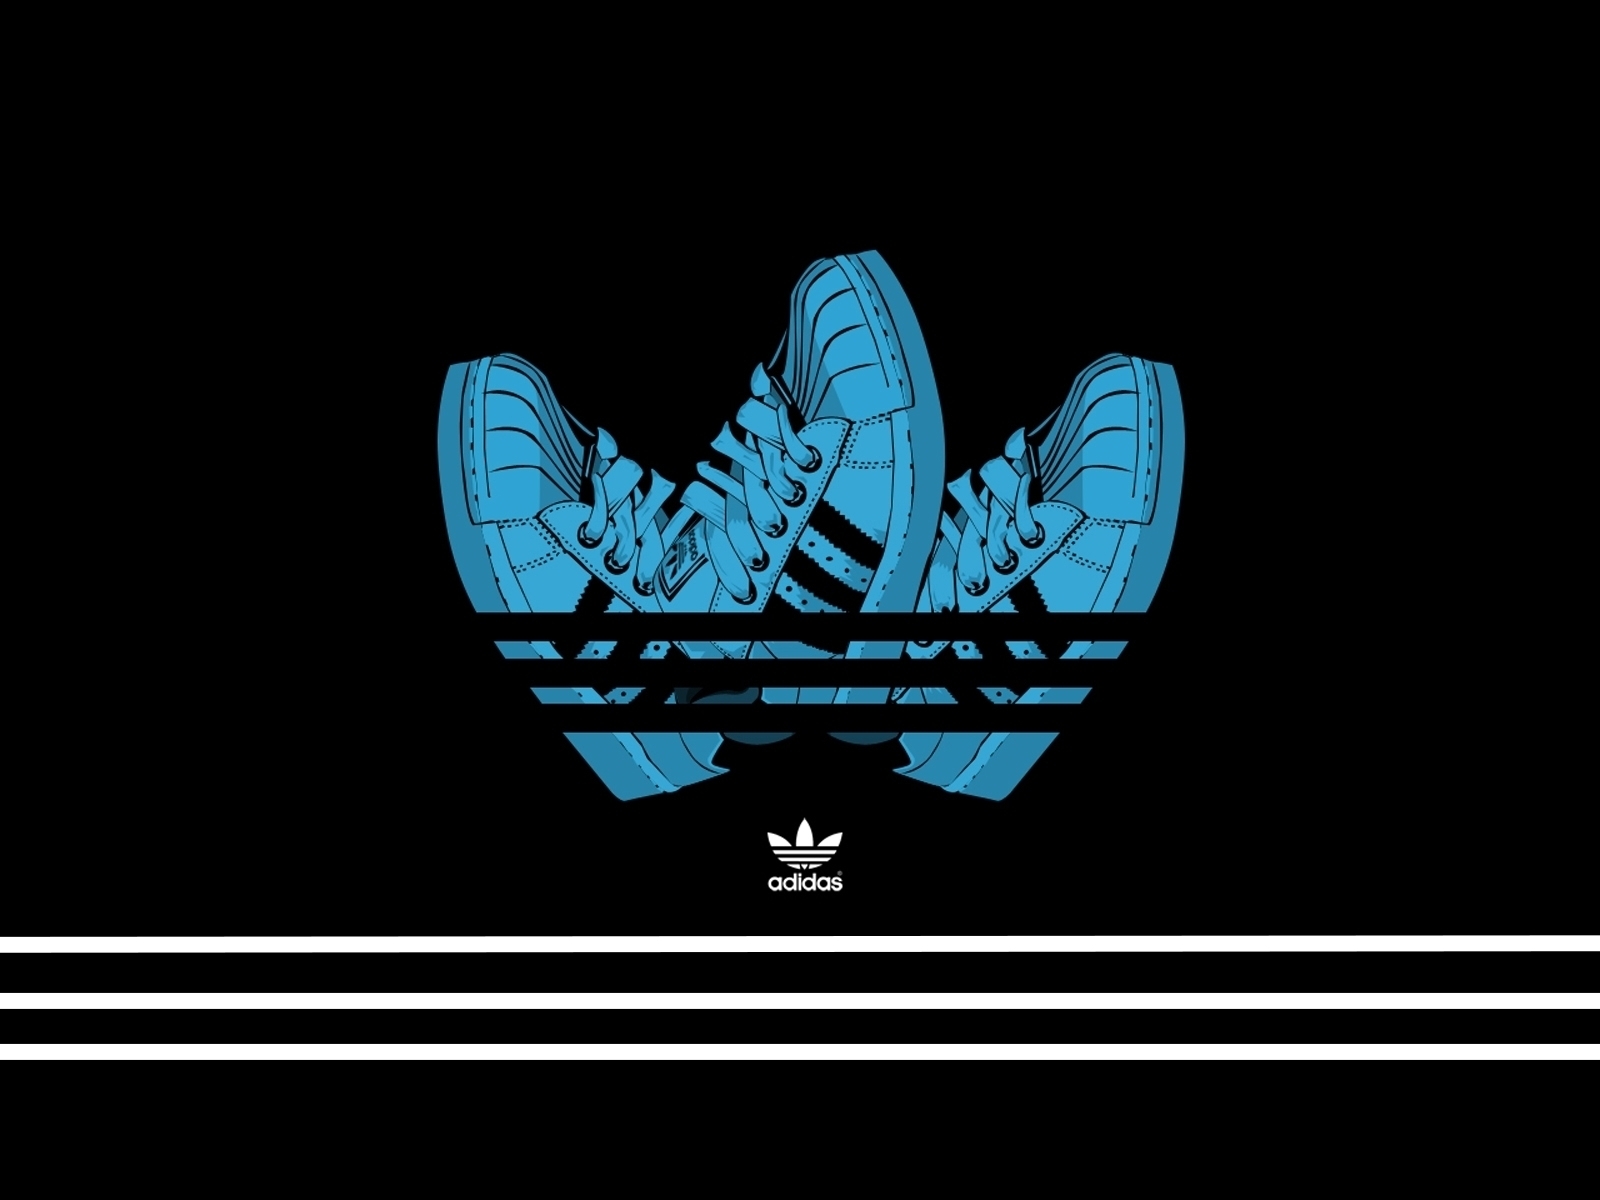 Adidas Creative Logo Design for 1600 x 1200 resolution